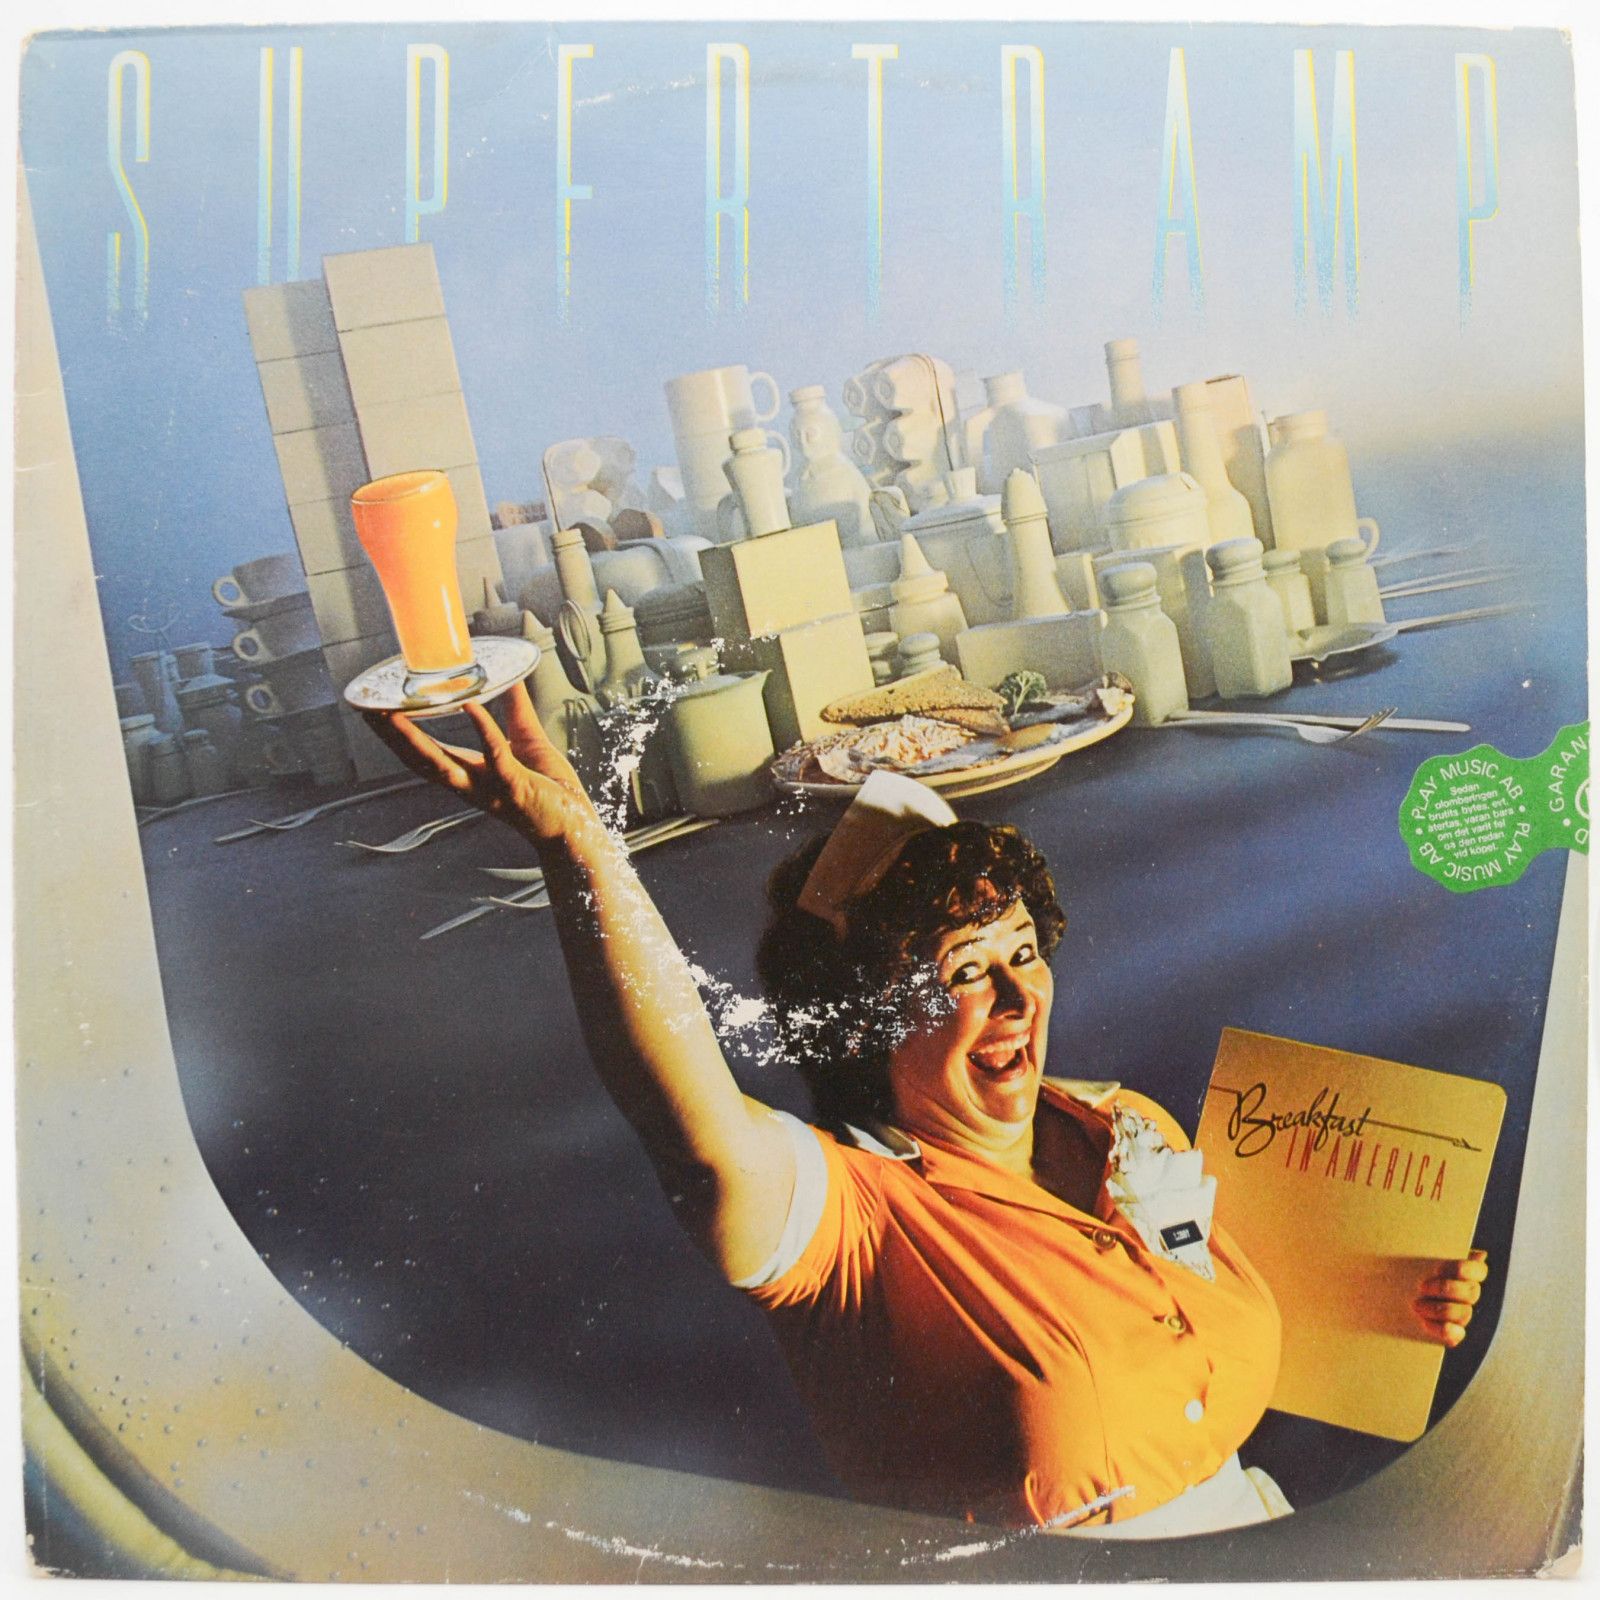 Supertramp — Breakfast In America, 1979